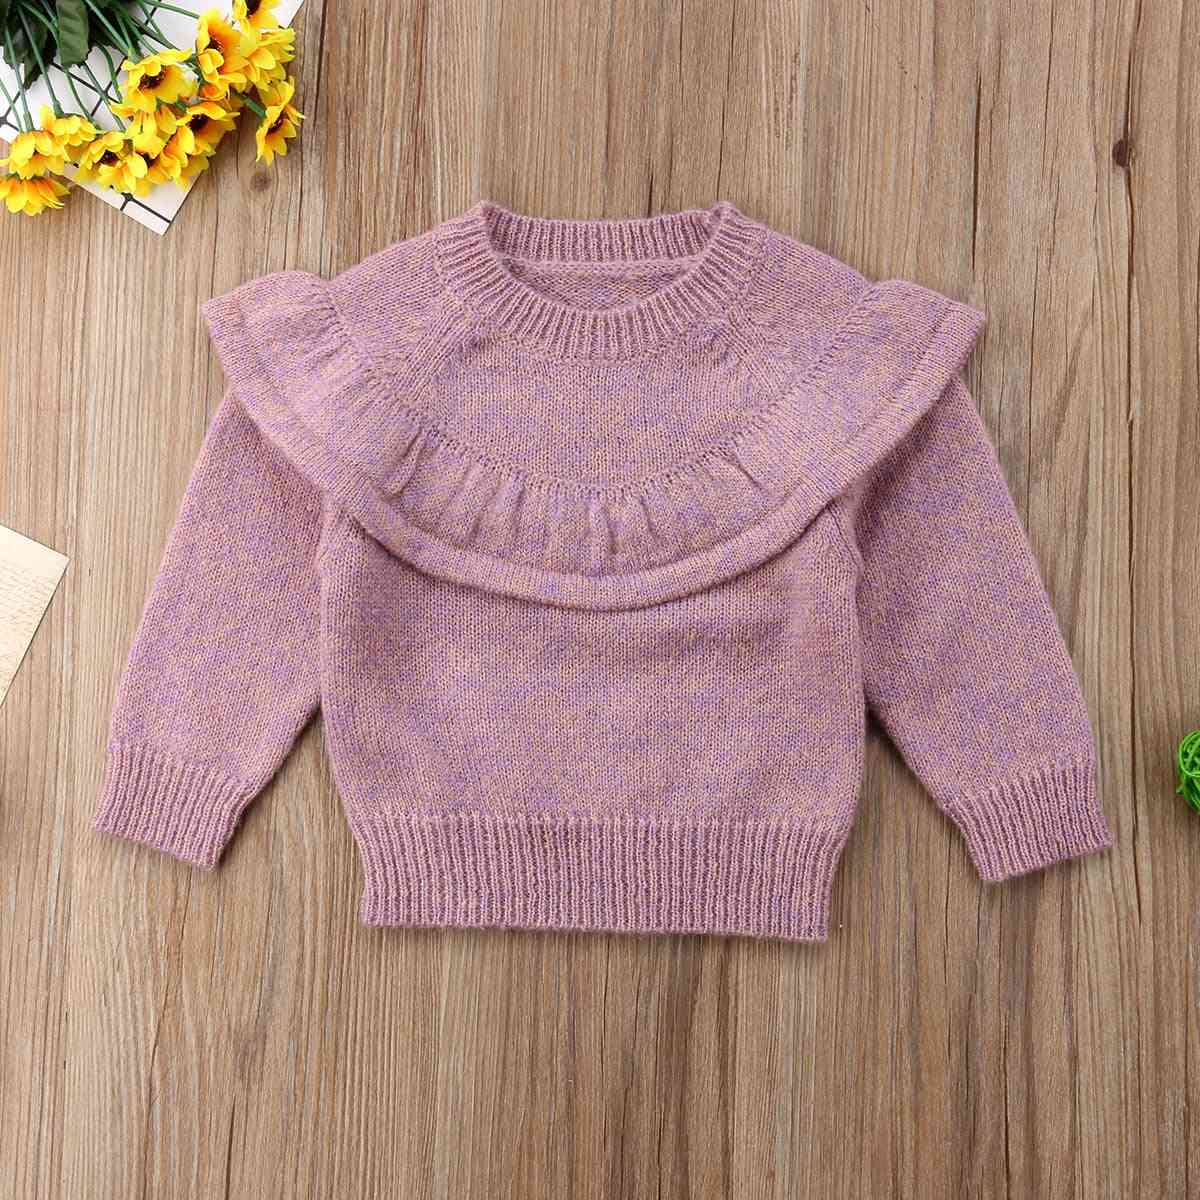 Autumn Winter Newborn Baby Girl Tops Ruffle Knitted Warm Sweater